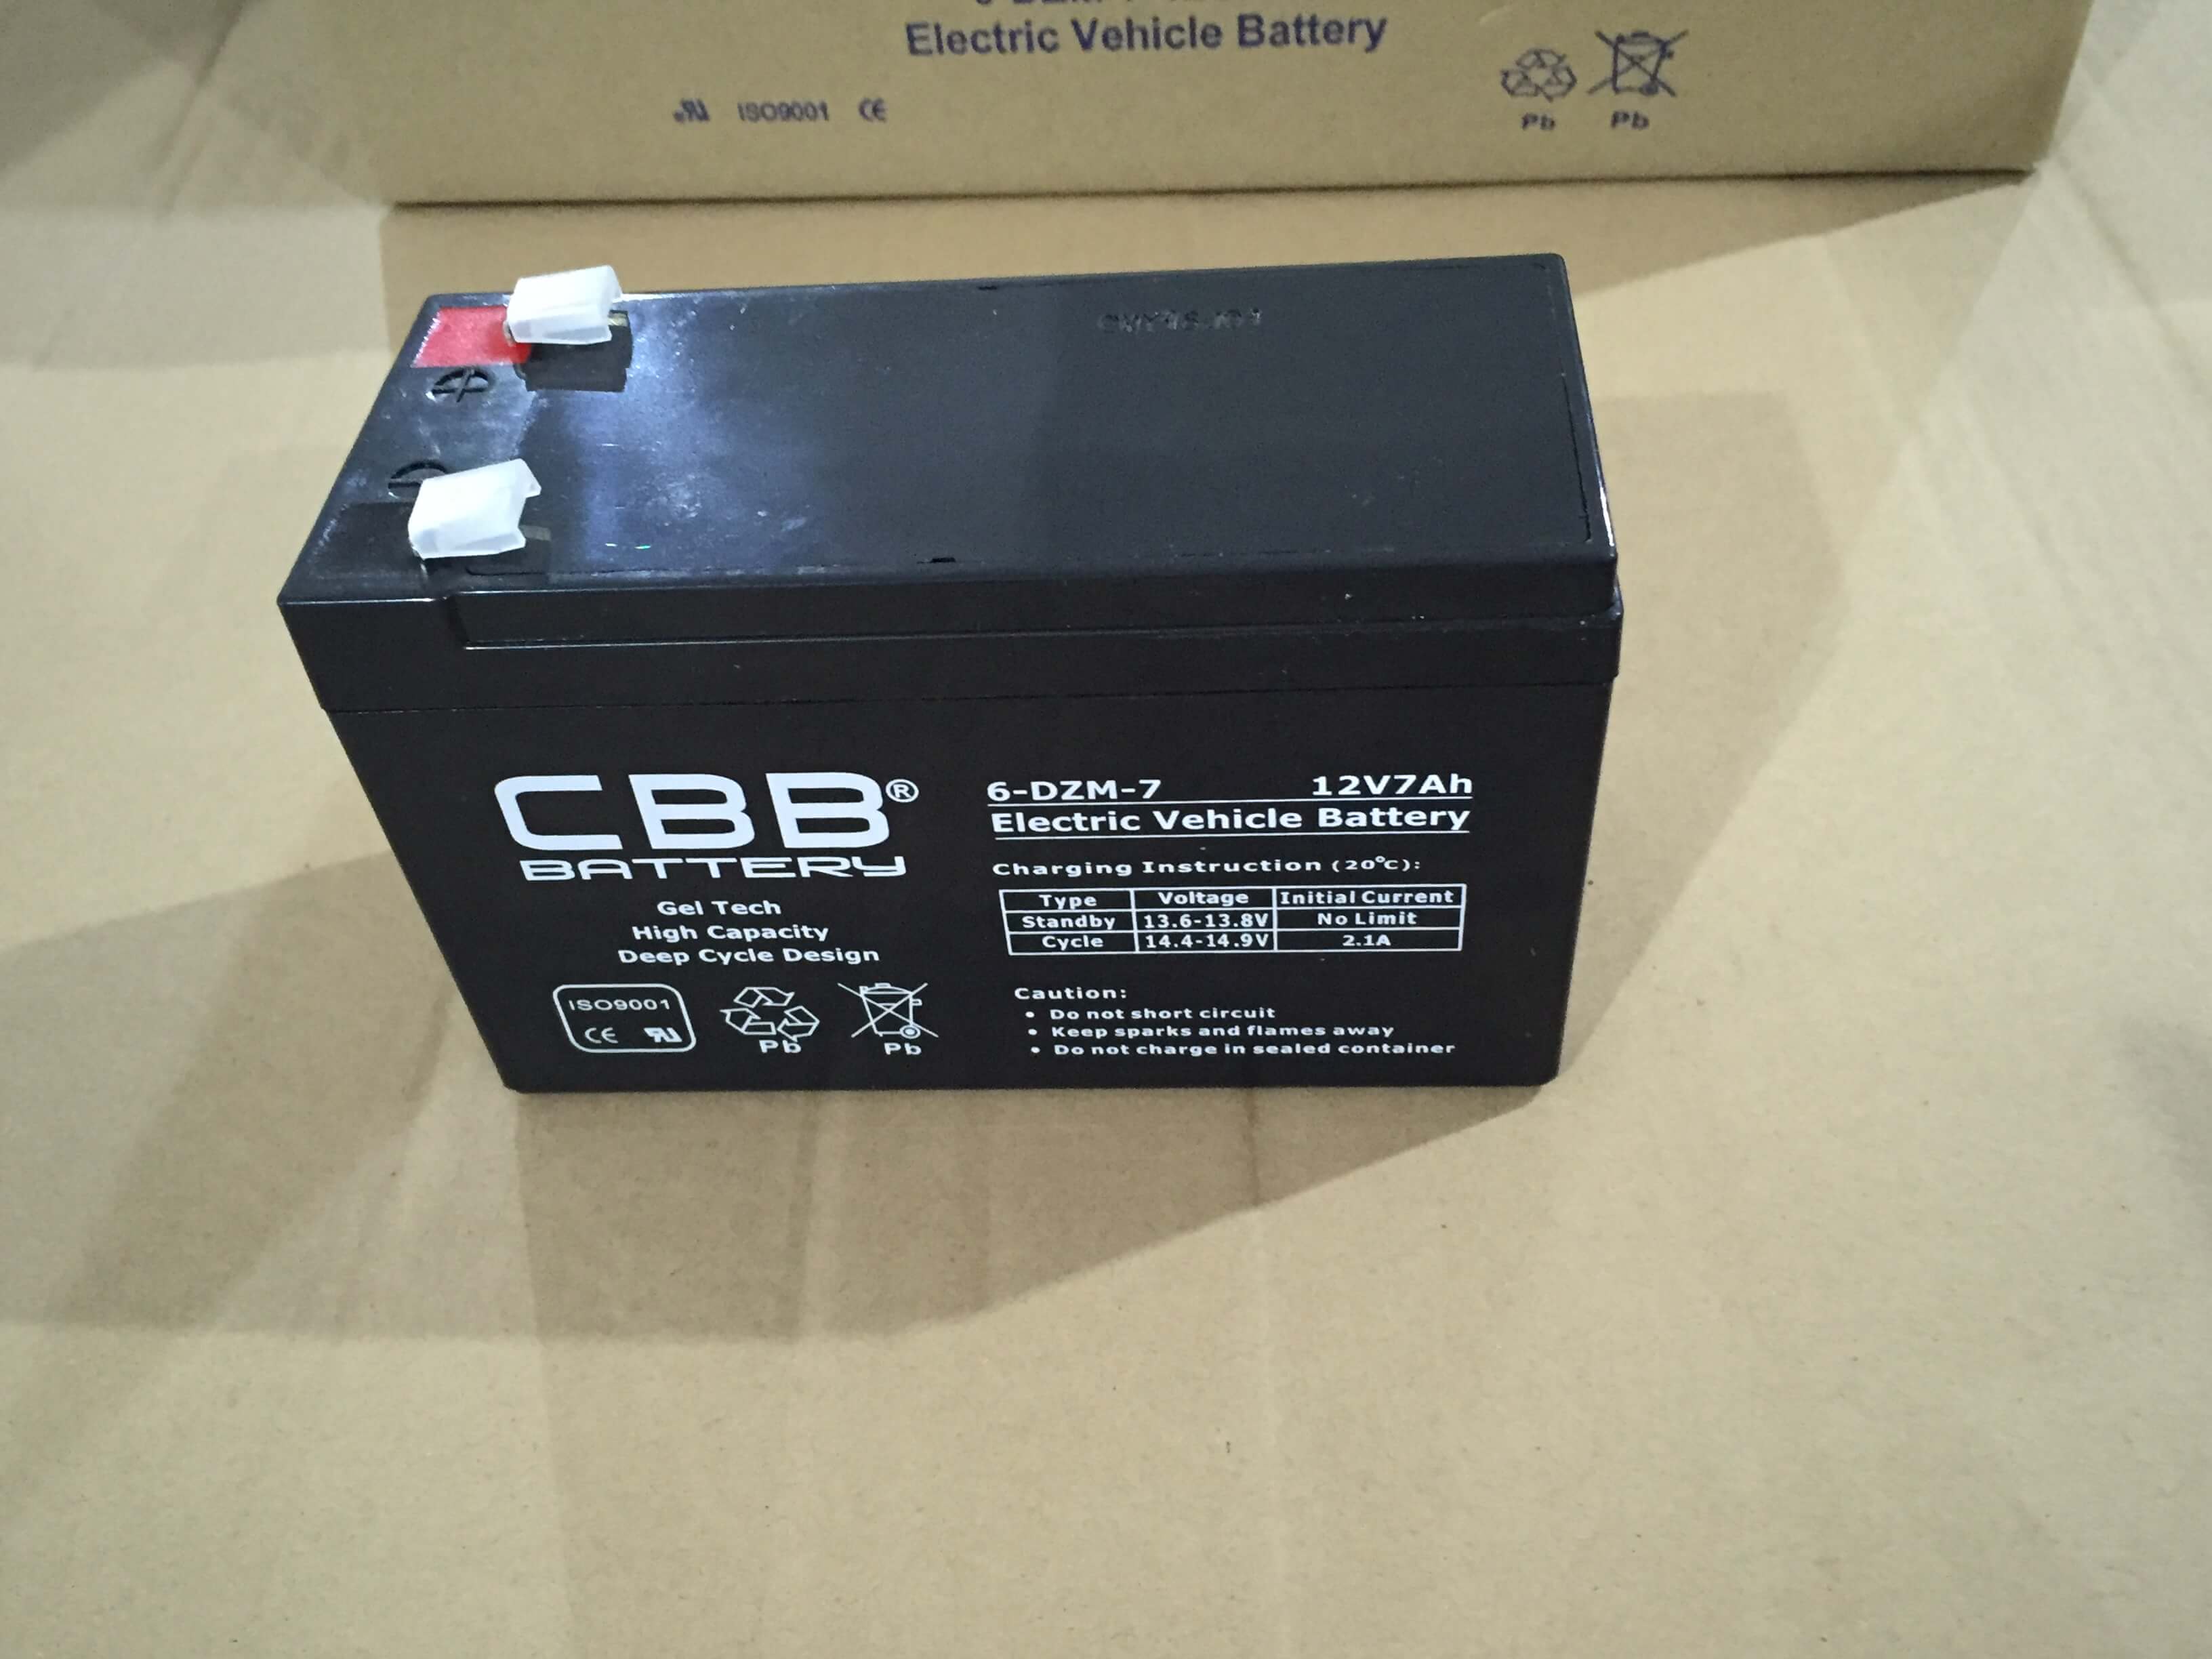 CBB® 6-DZM-7 Electric Bike/Scooter Battery 